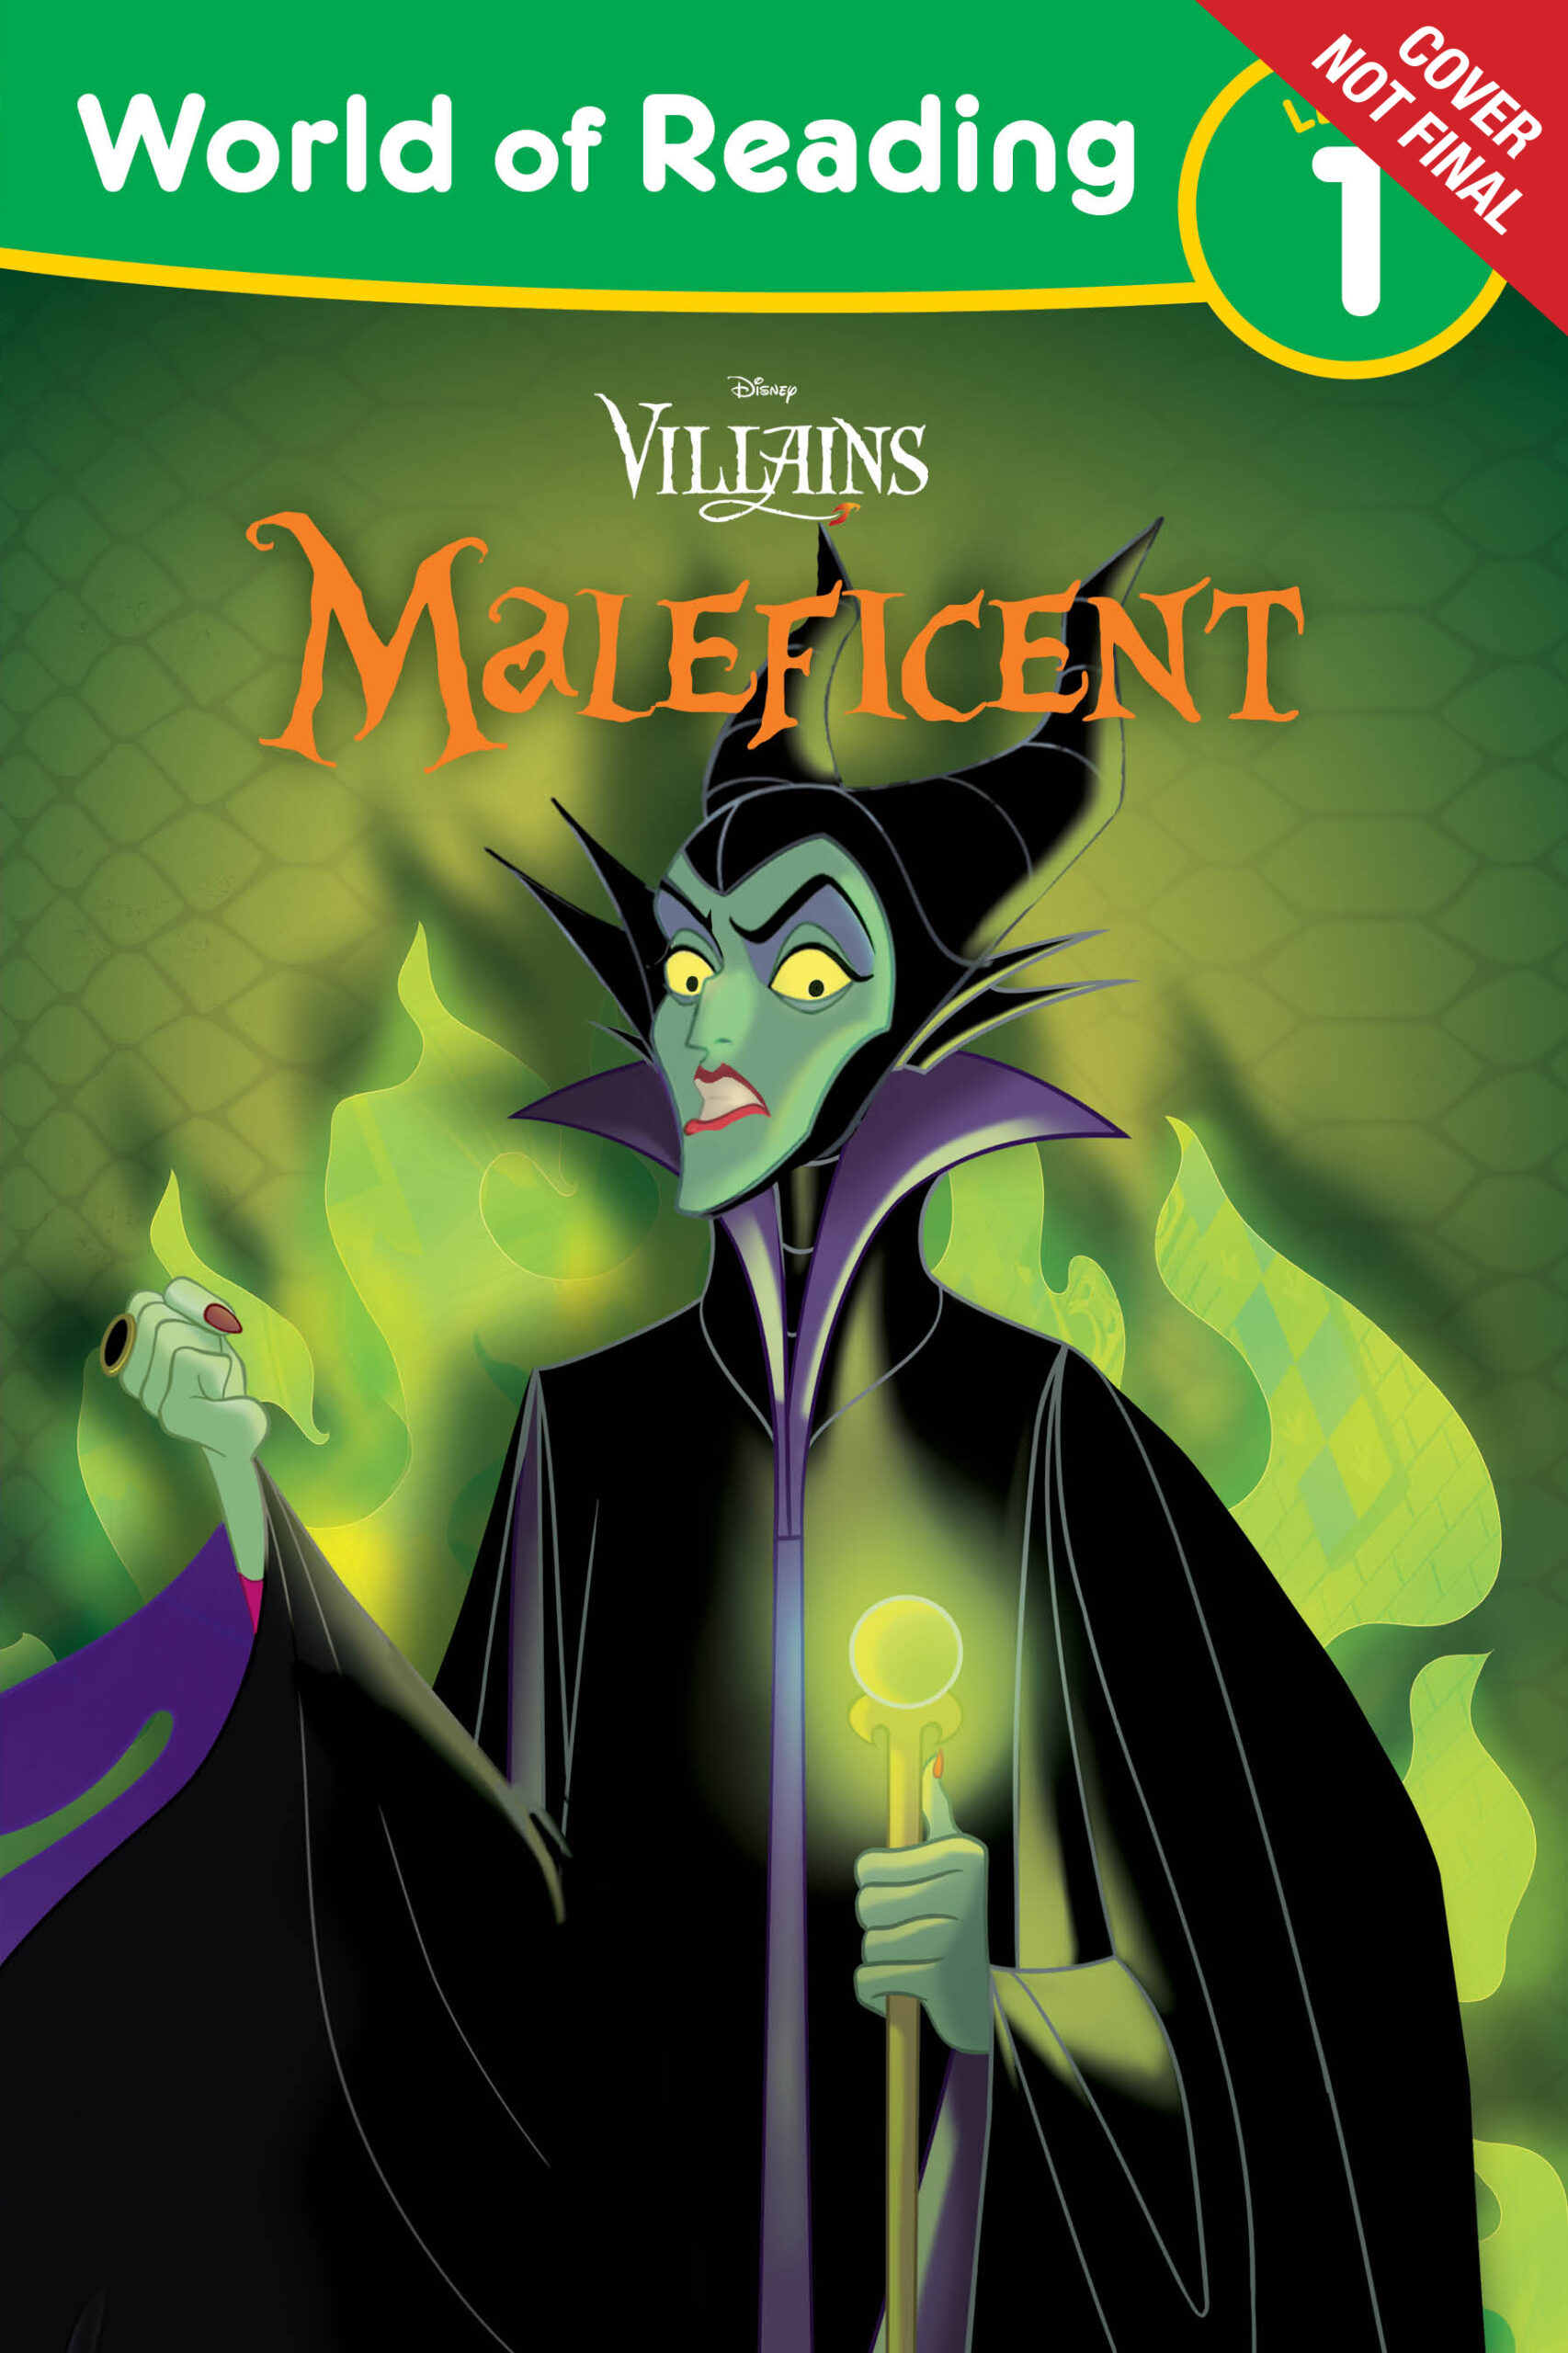 Maleficent　Reading　Books　World　Disney　of　Storybook　Team　Disney　by　Disney　Art　Disney,　Villains　Books